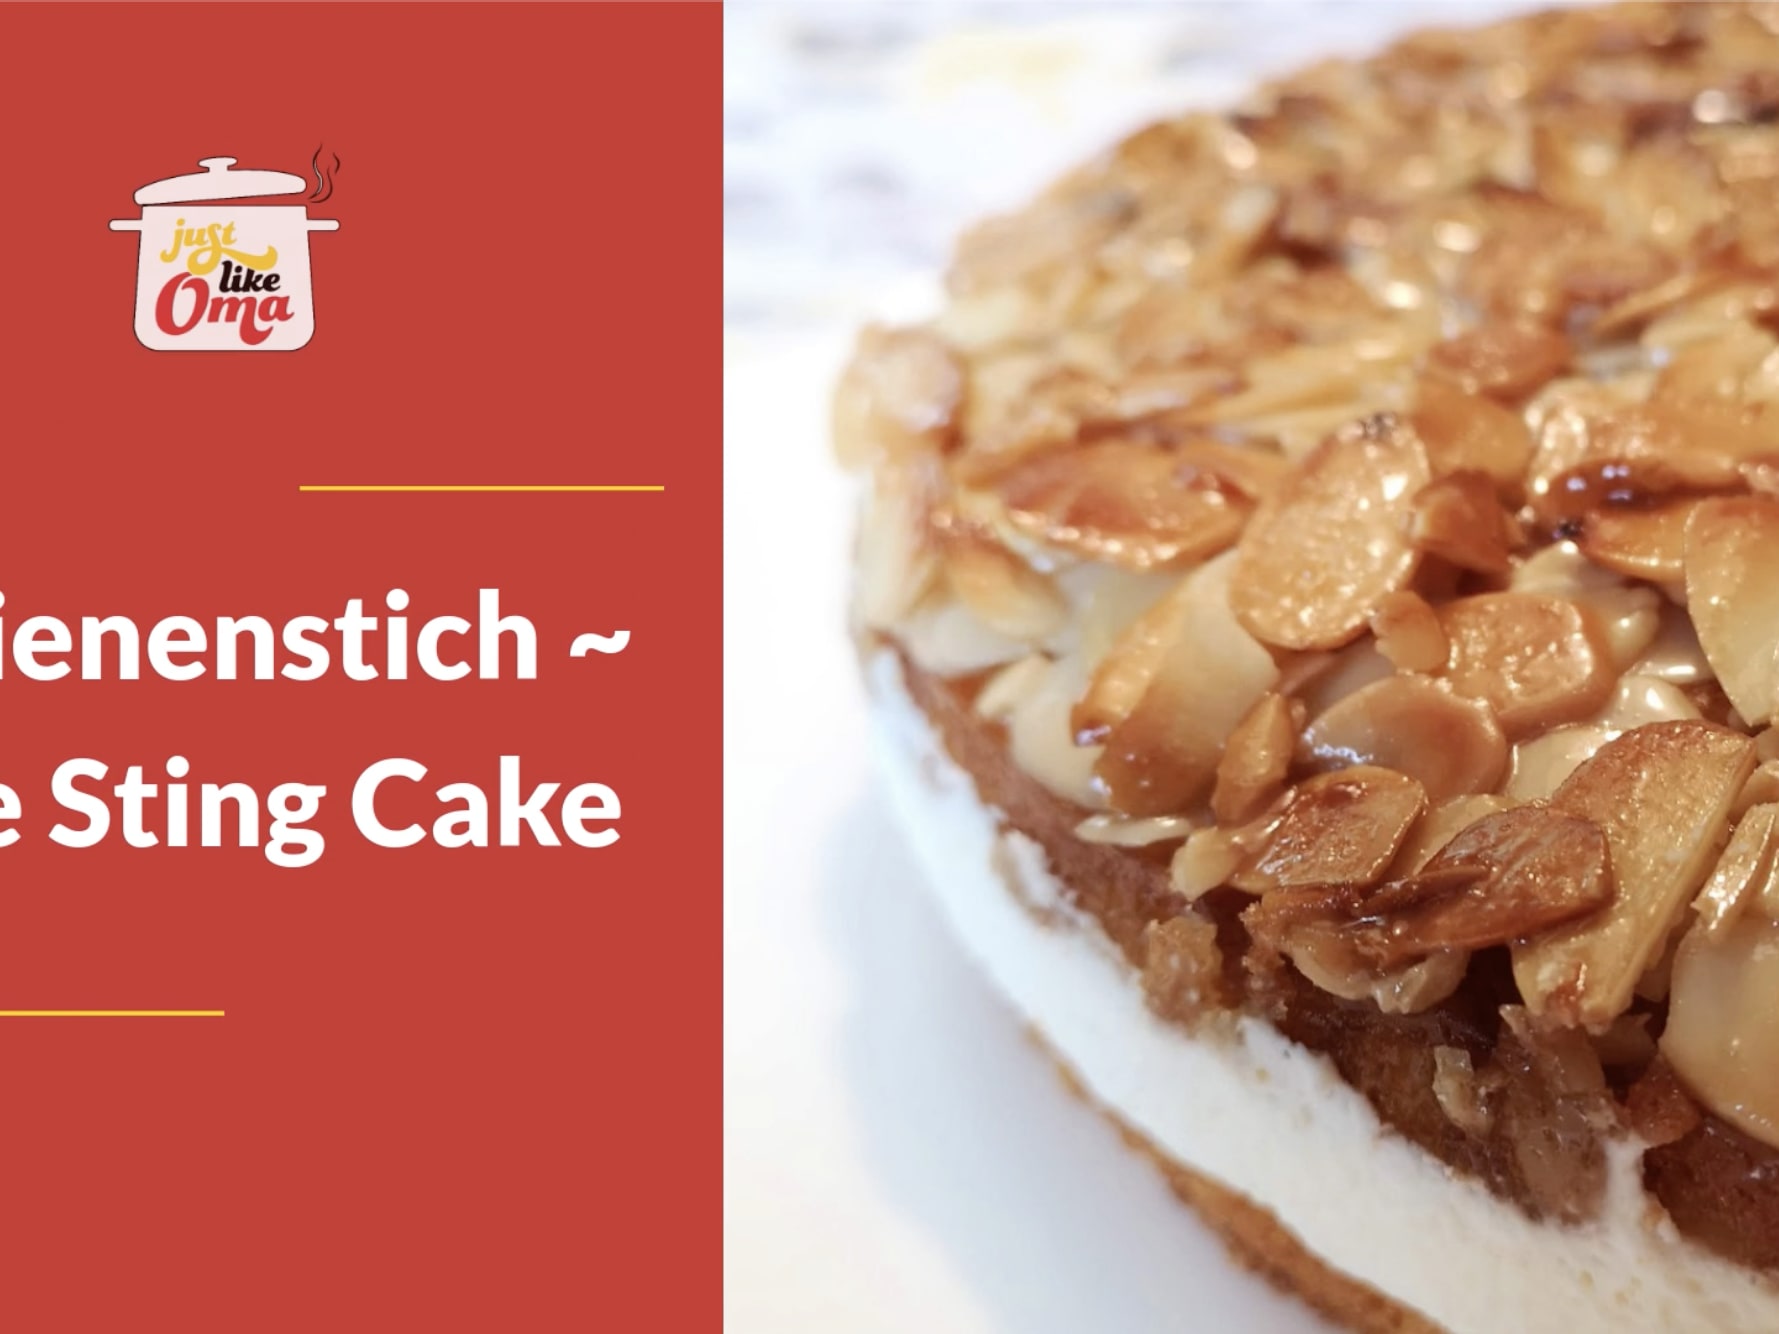 Bienenstich: German Bee Sting Cake | the Sunday Baker